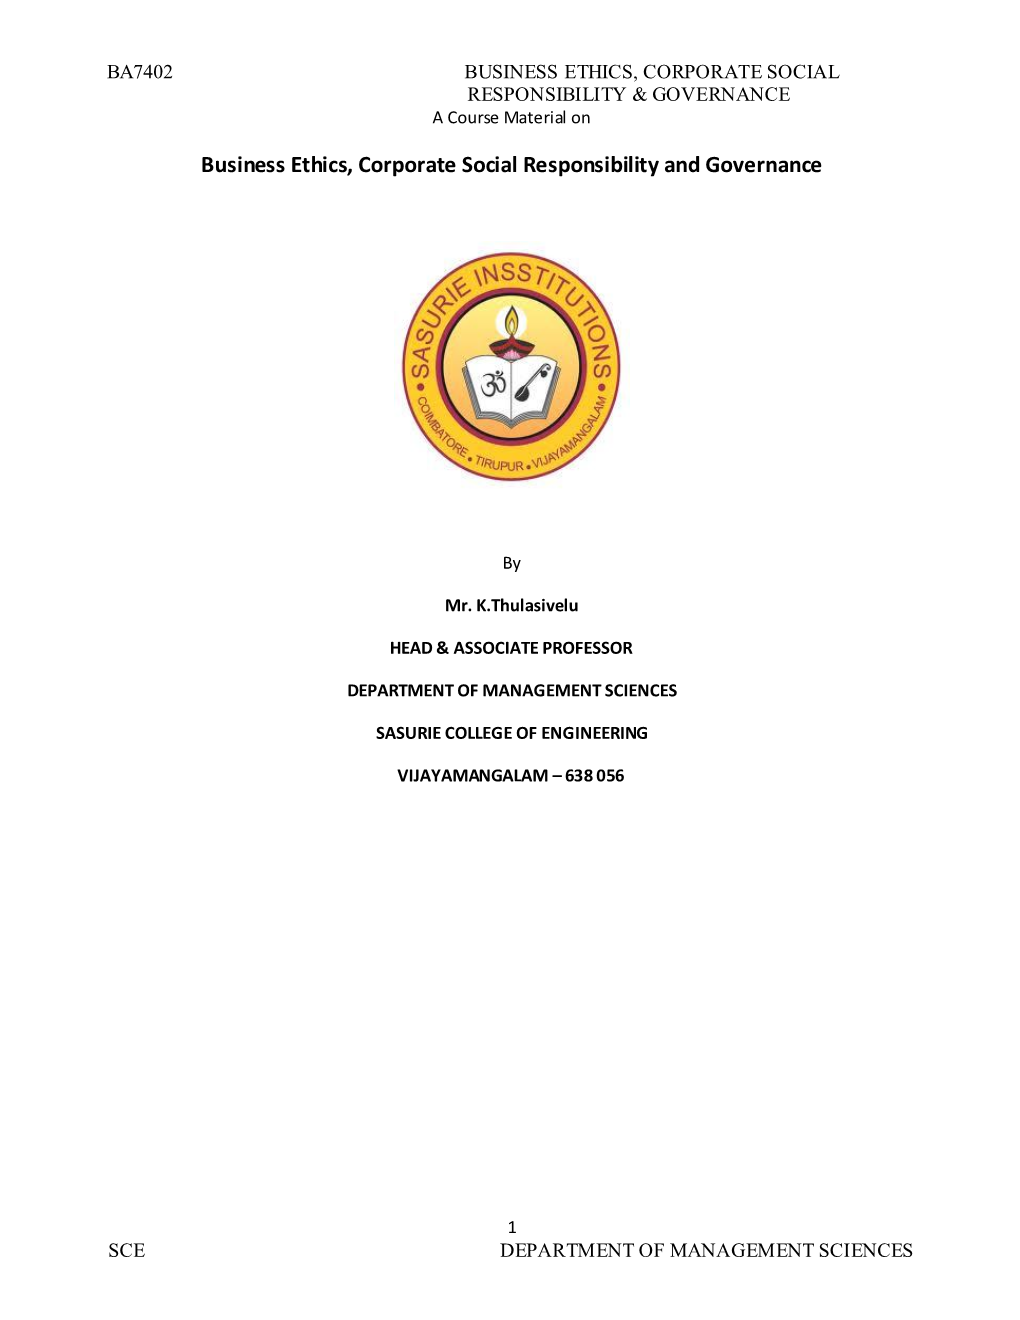 Ba7402 Business Ethics, Corporate Social Responsibility & Governance